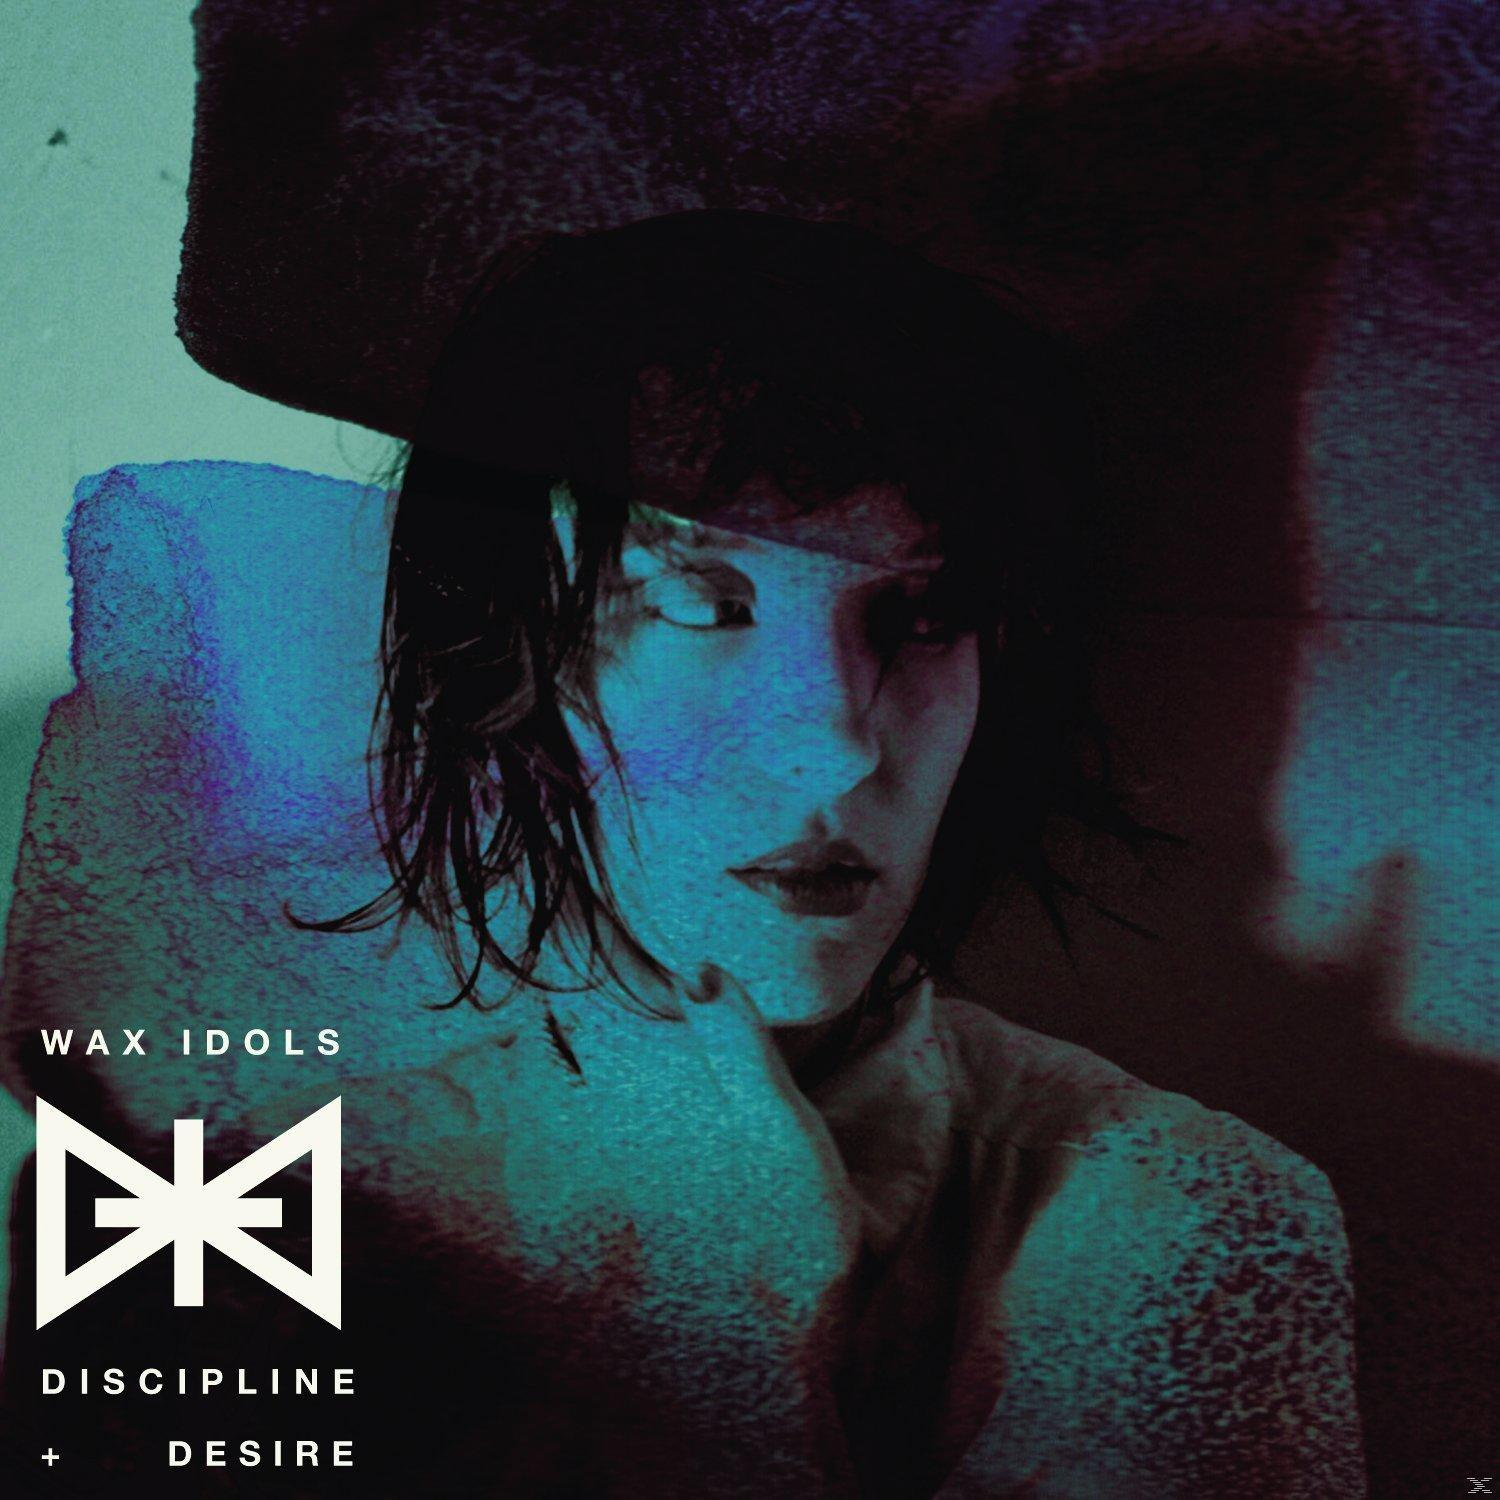 Wax Idols (Vinyl) (LP) Discipline & - - Desire